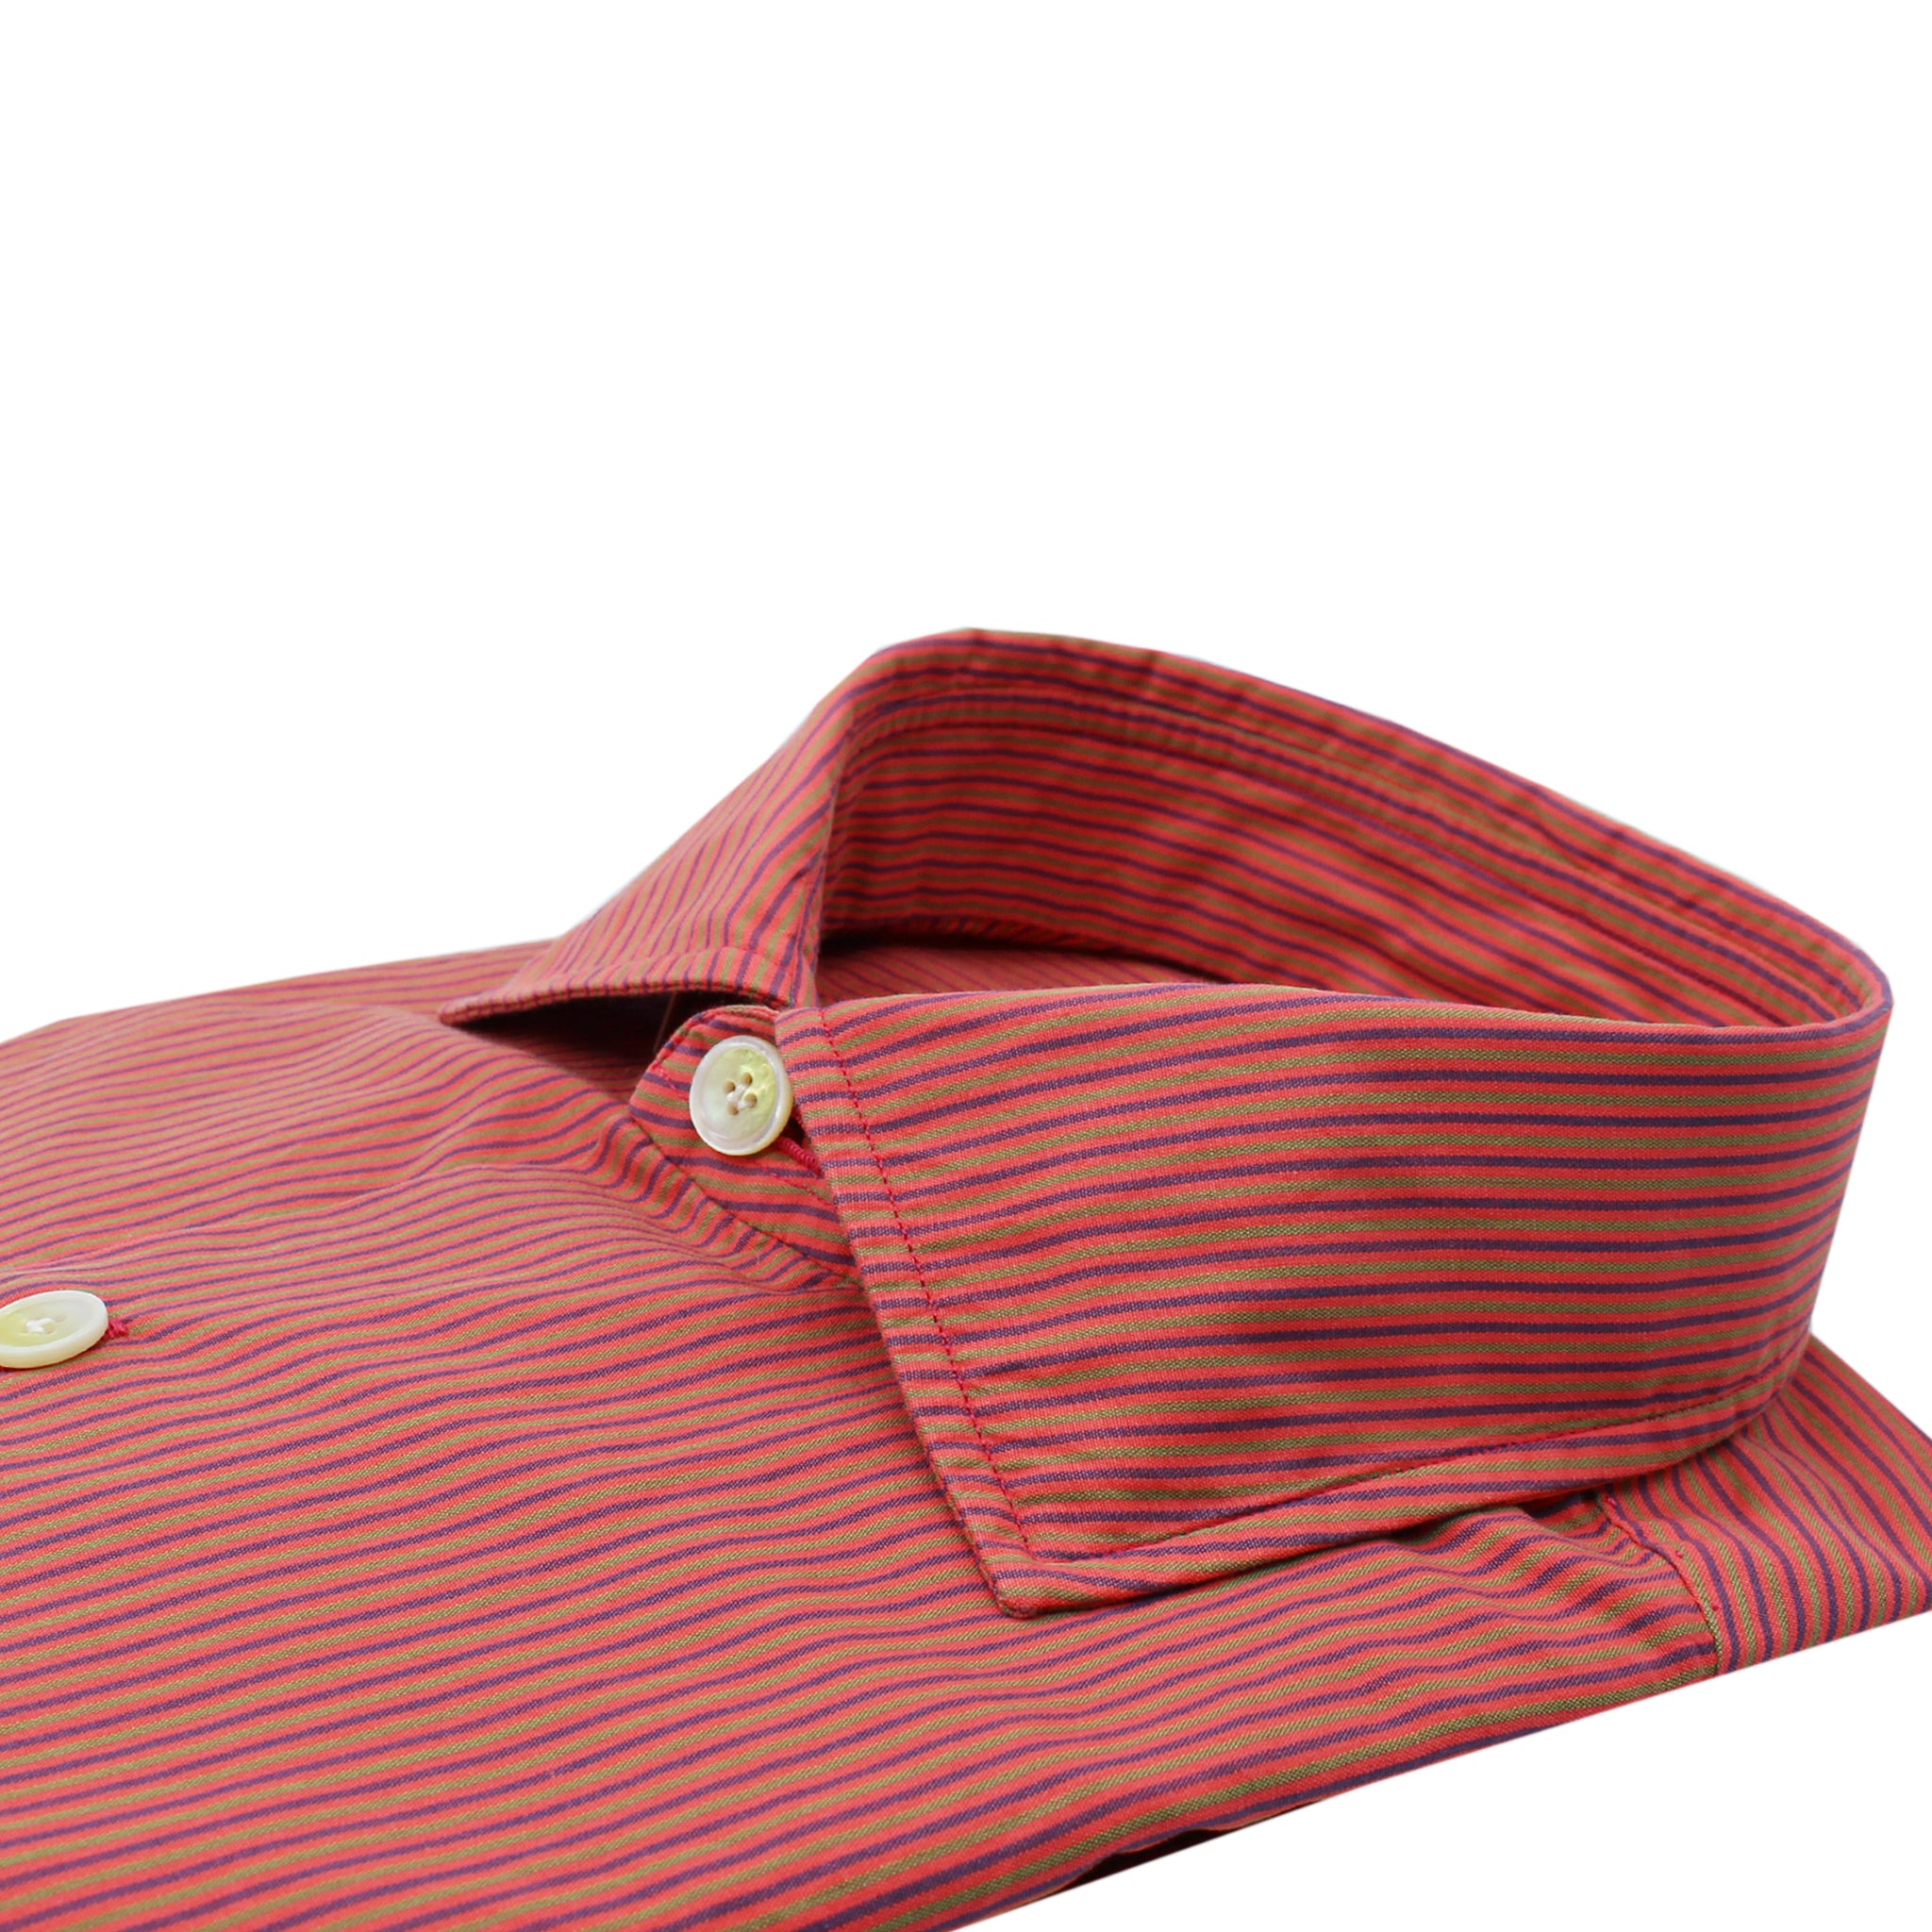 Carlo Riva Enzymed Cotton Striped Classic Shirt